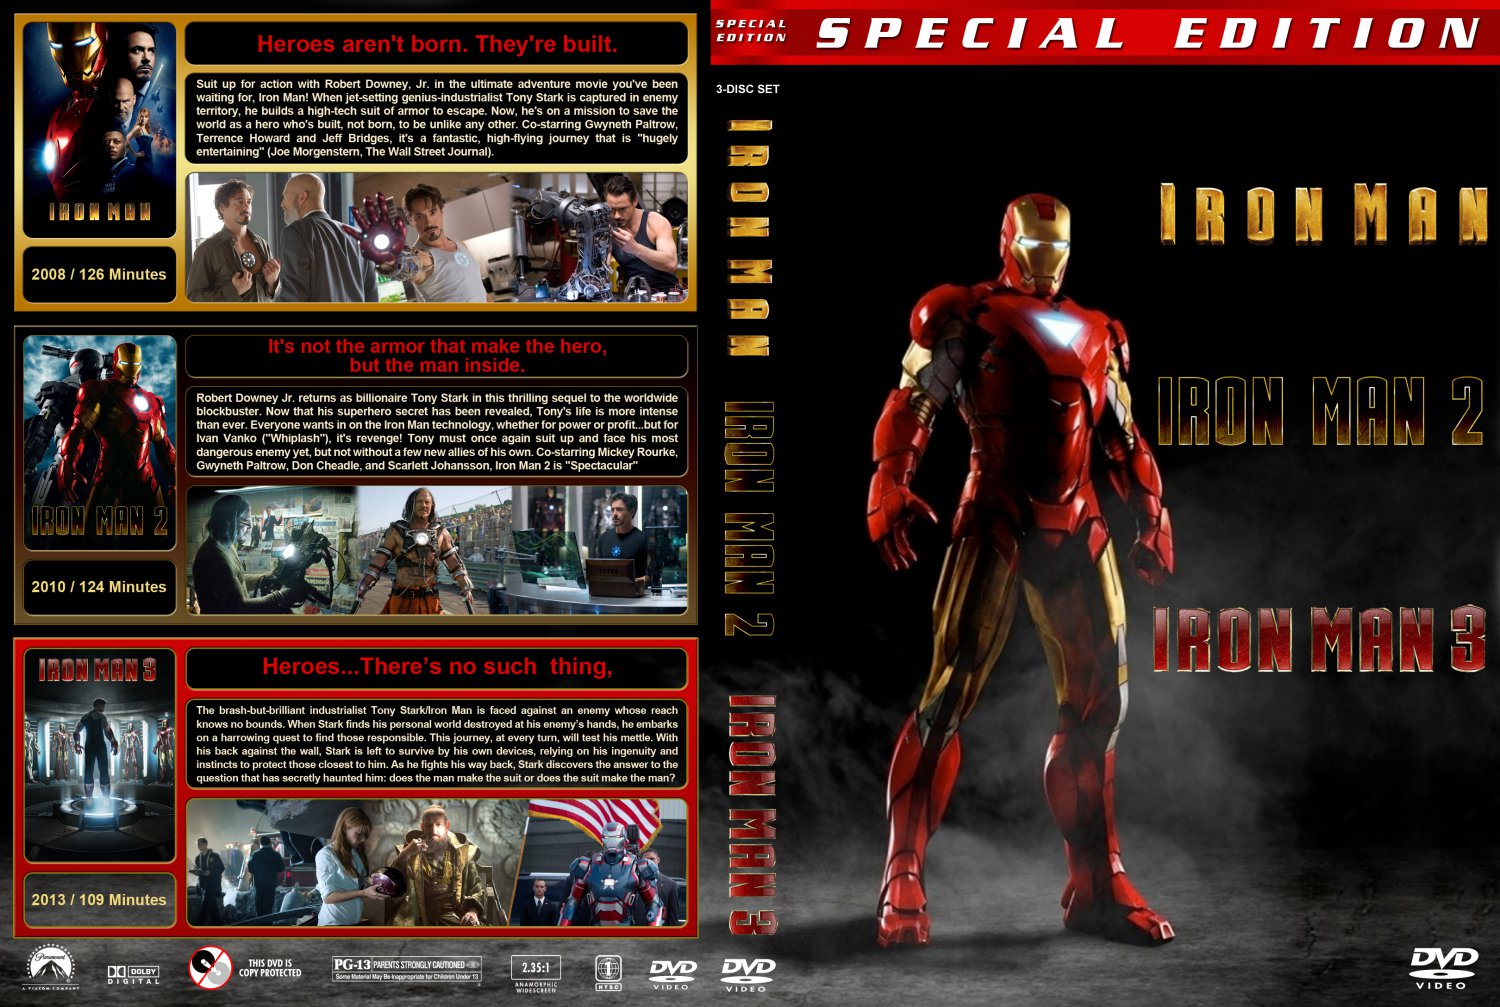 Iron Man Trilogy